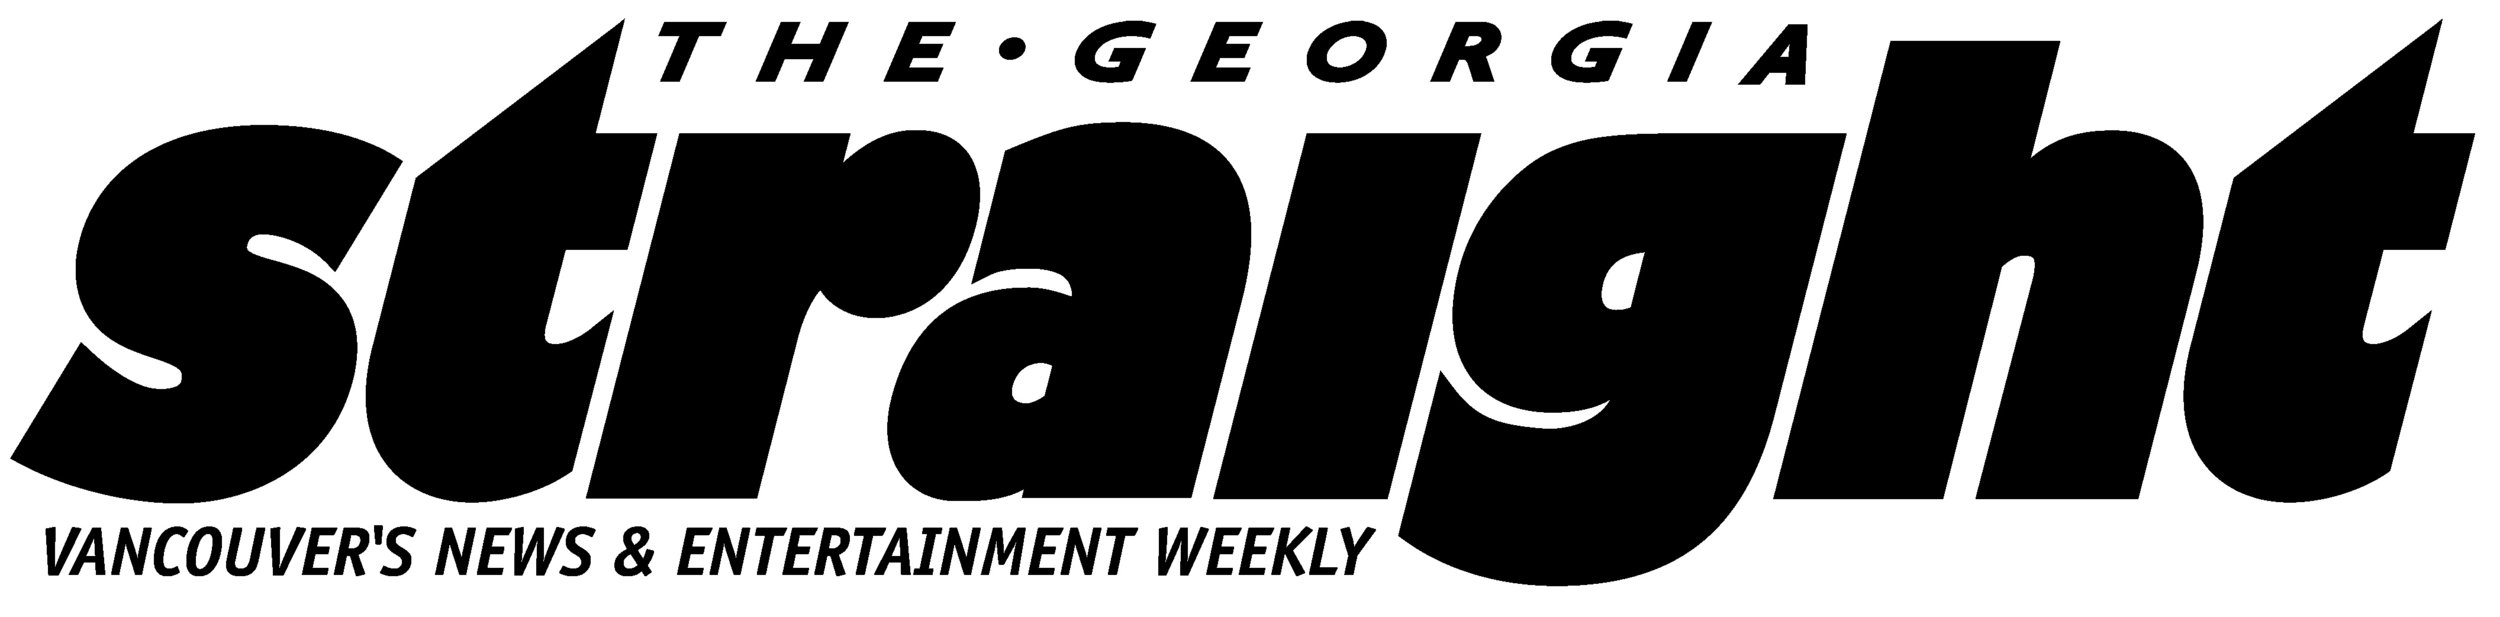 Georgia-Straight-Logo.jpg